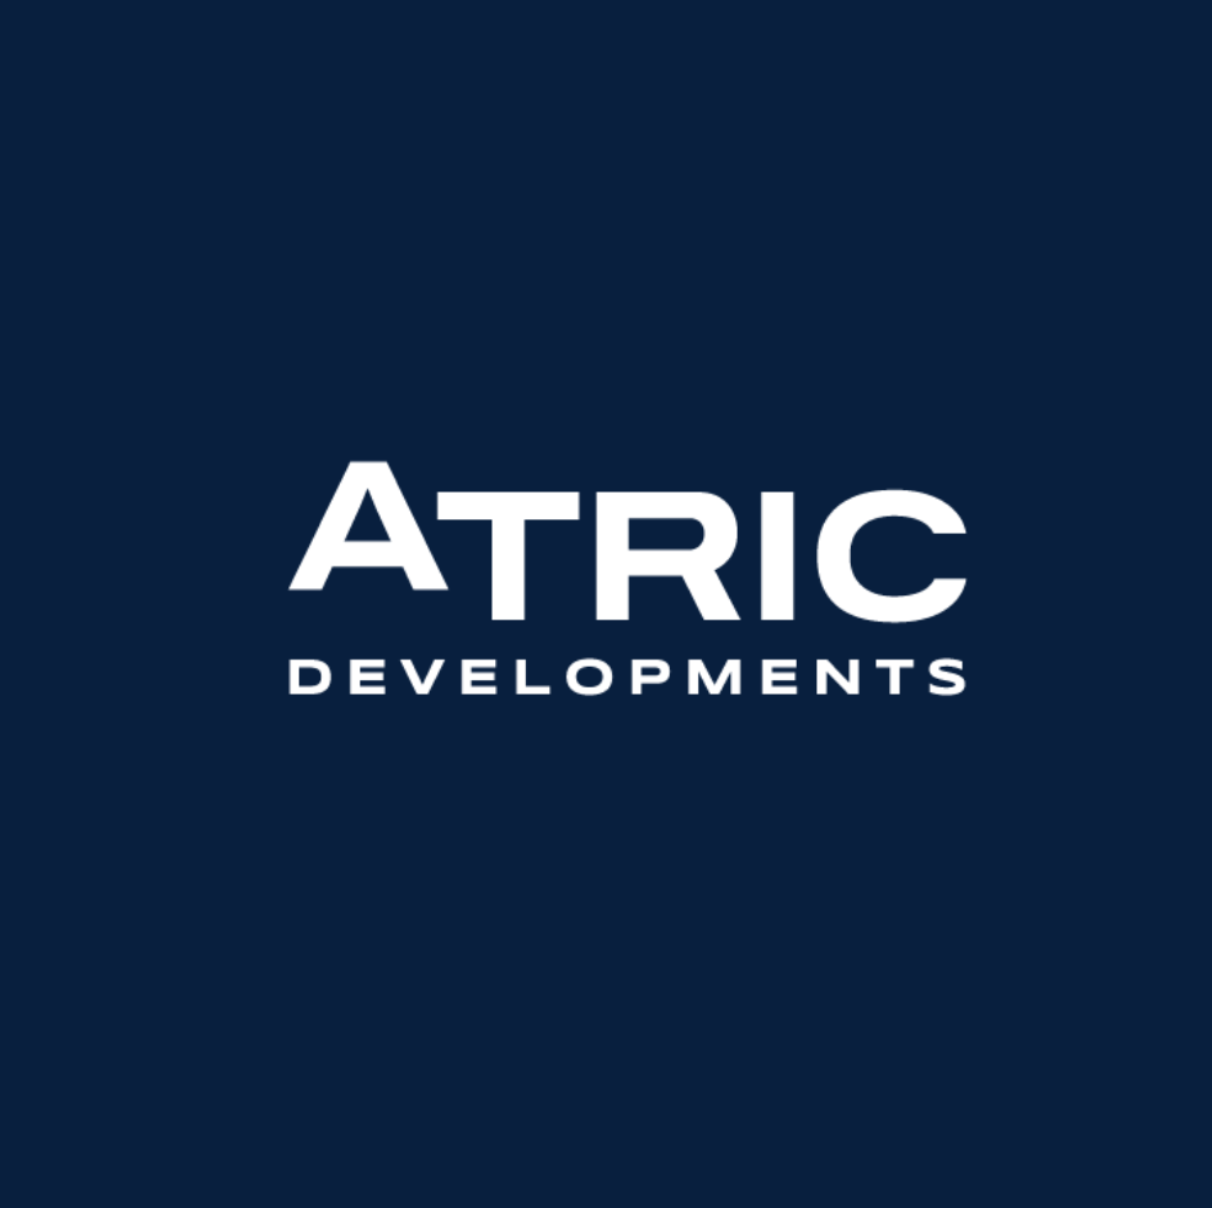 ATRIC Developments